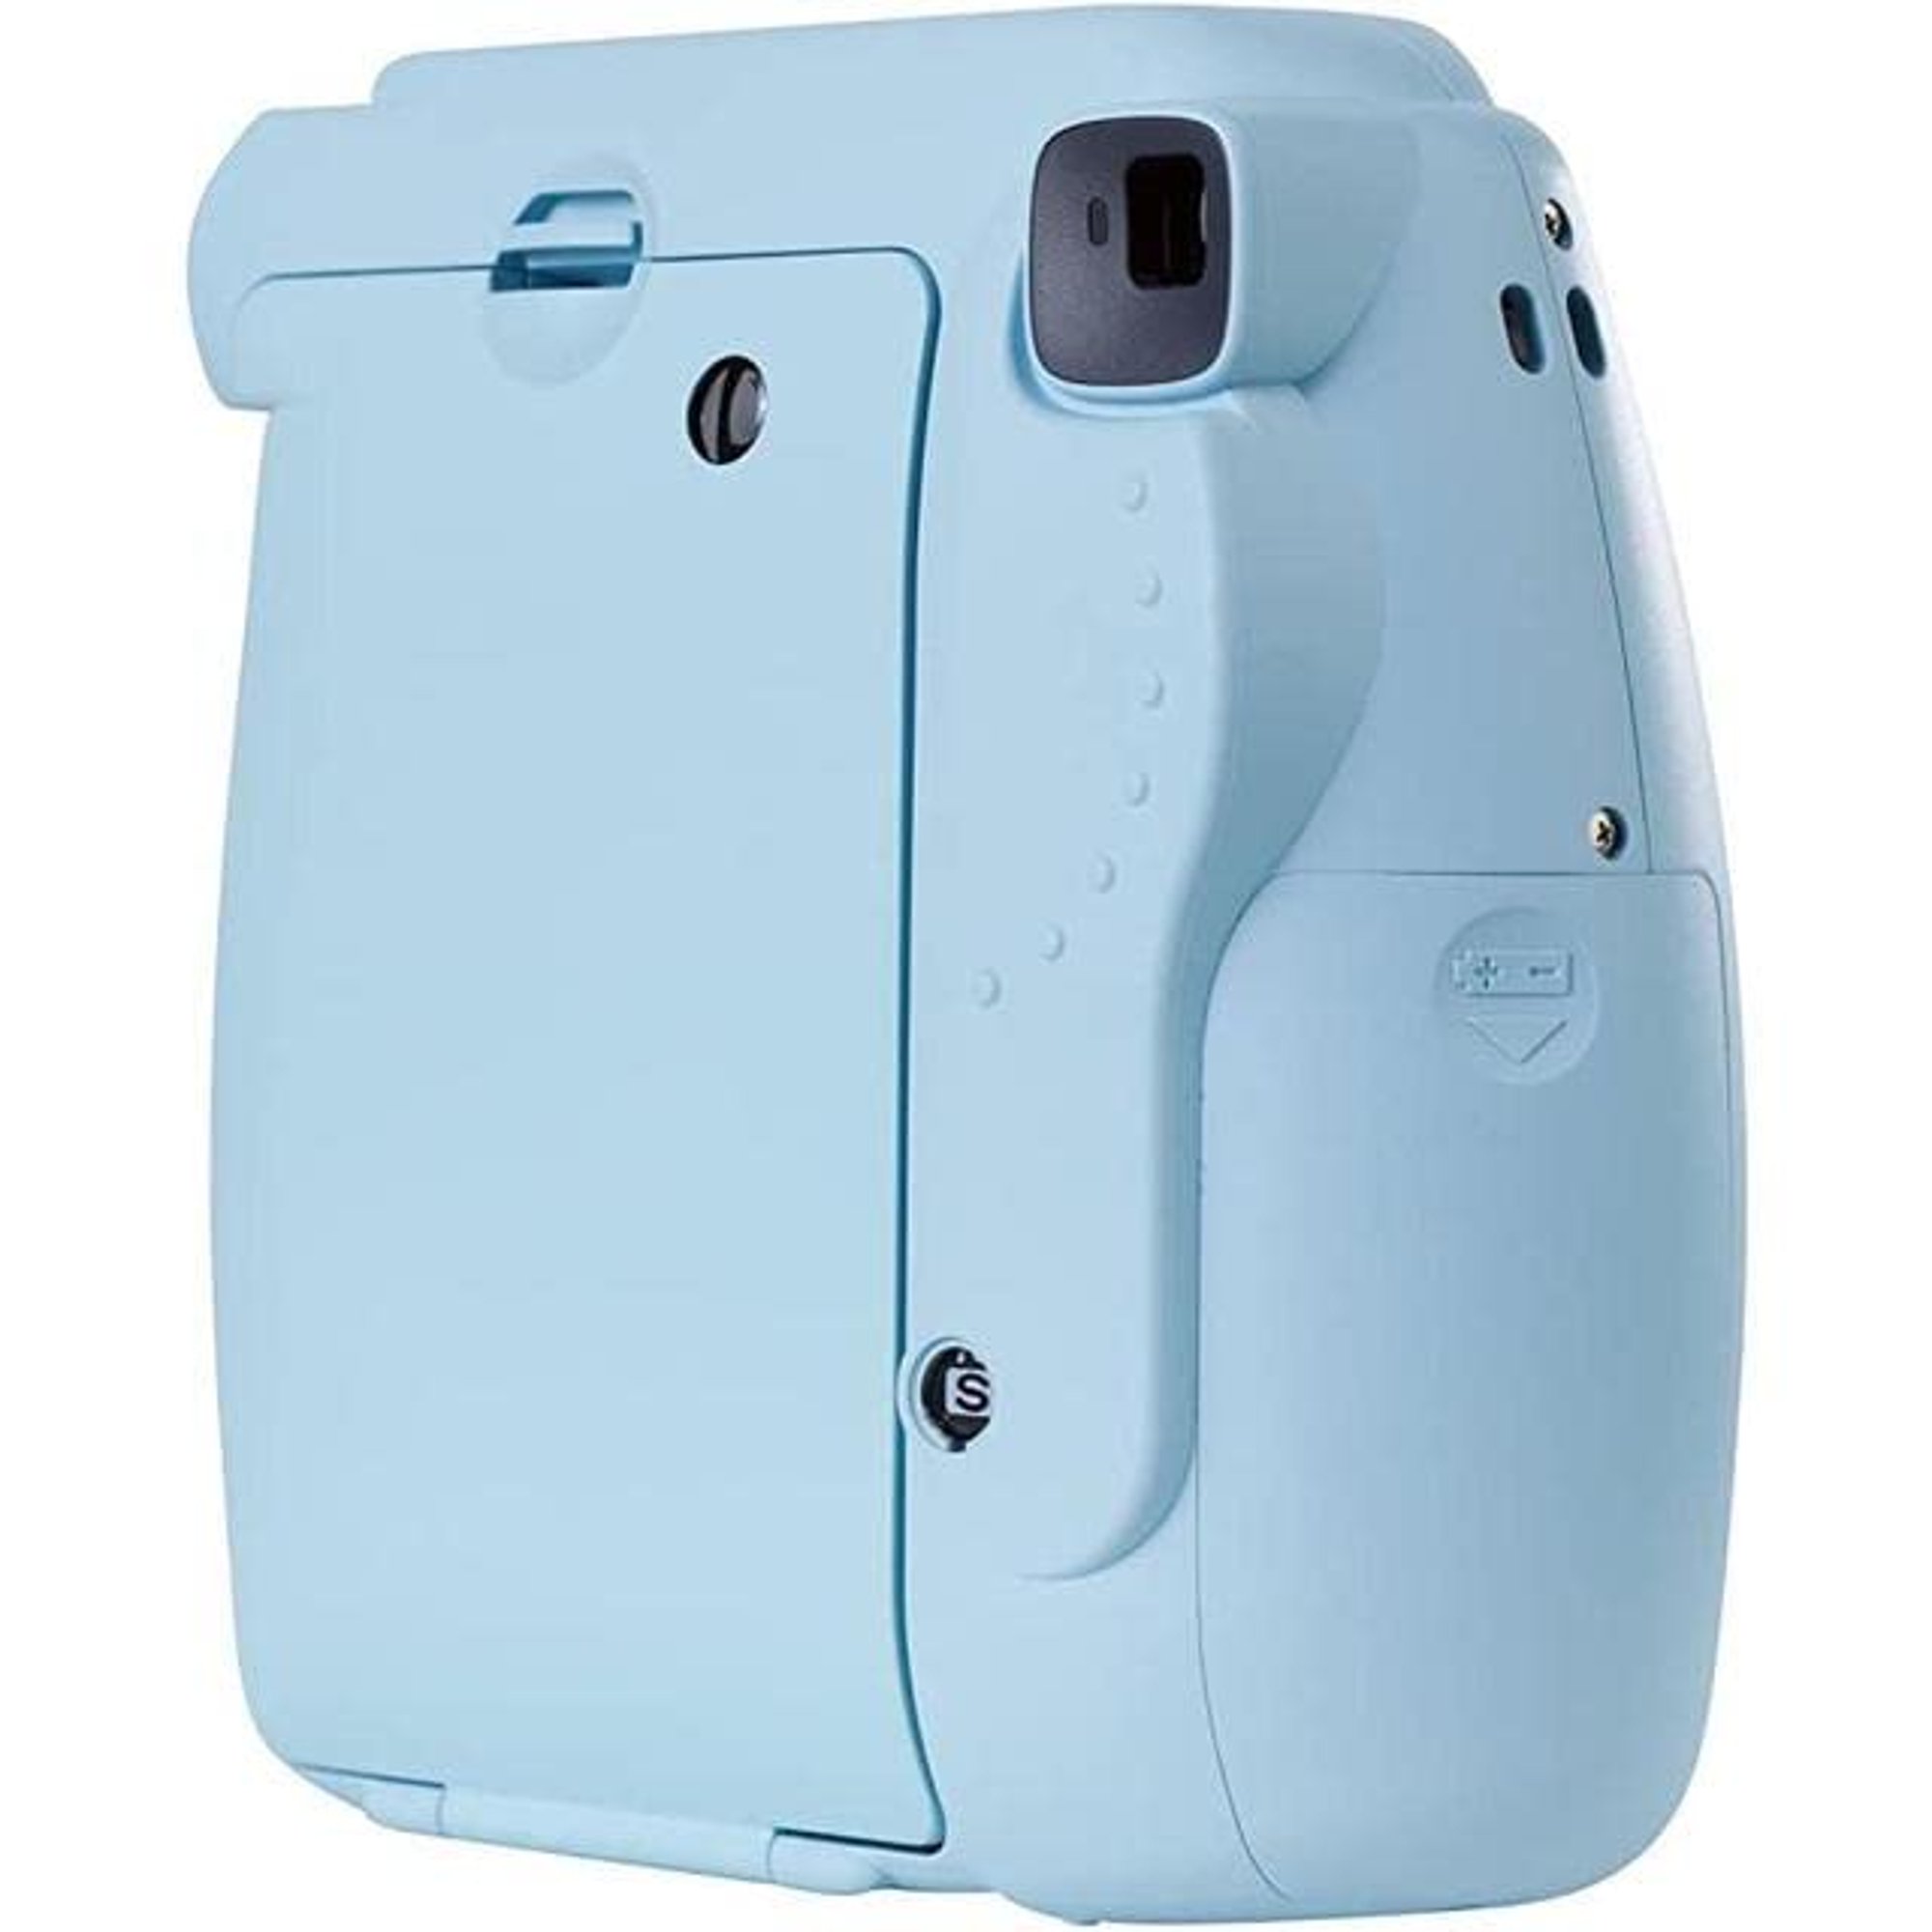 Cámara instantánea Fujifilm Instax Mini 7S azul clara